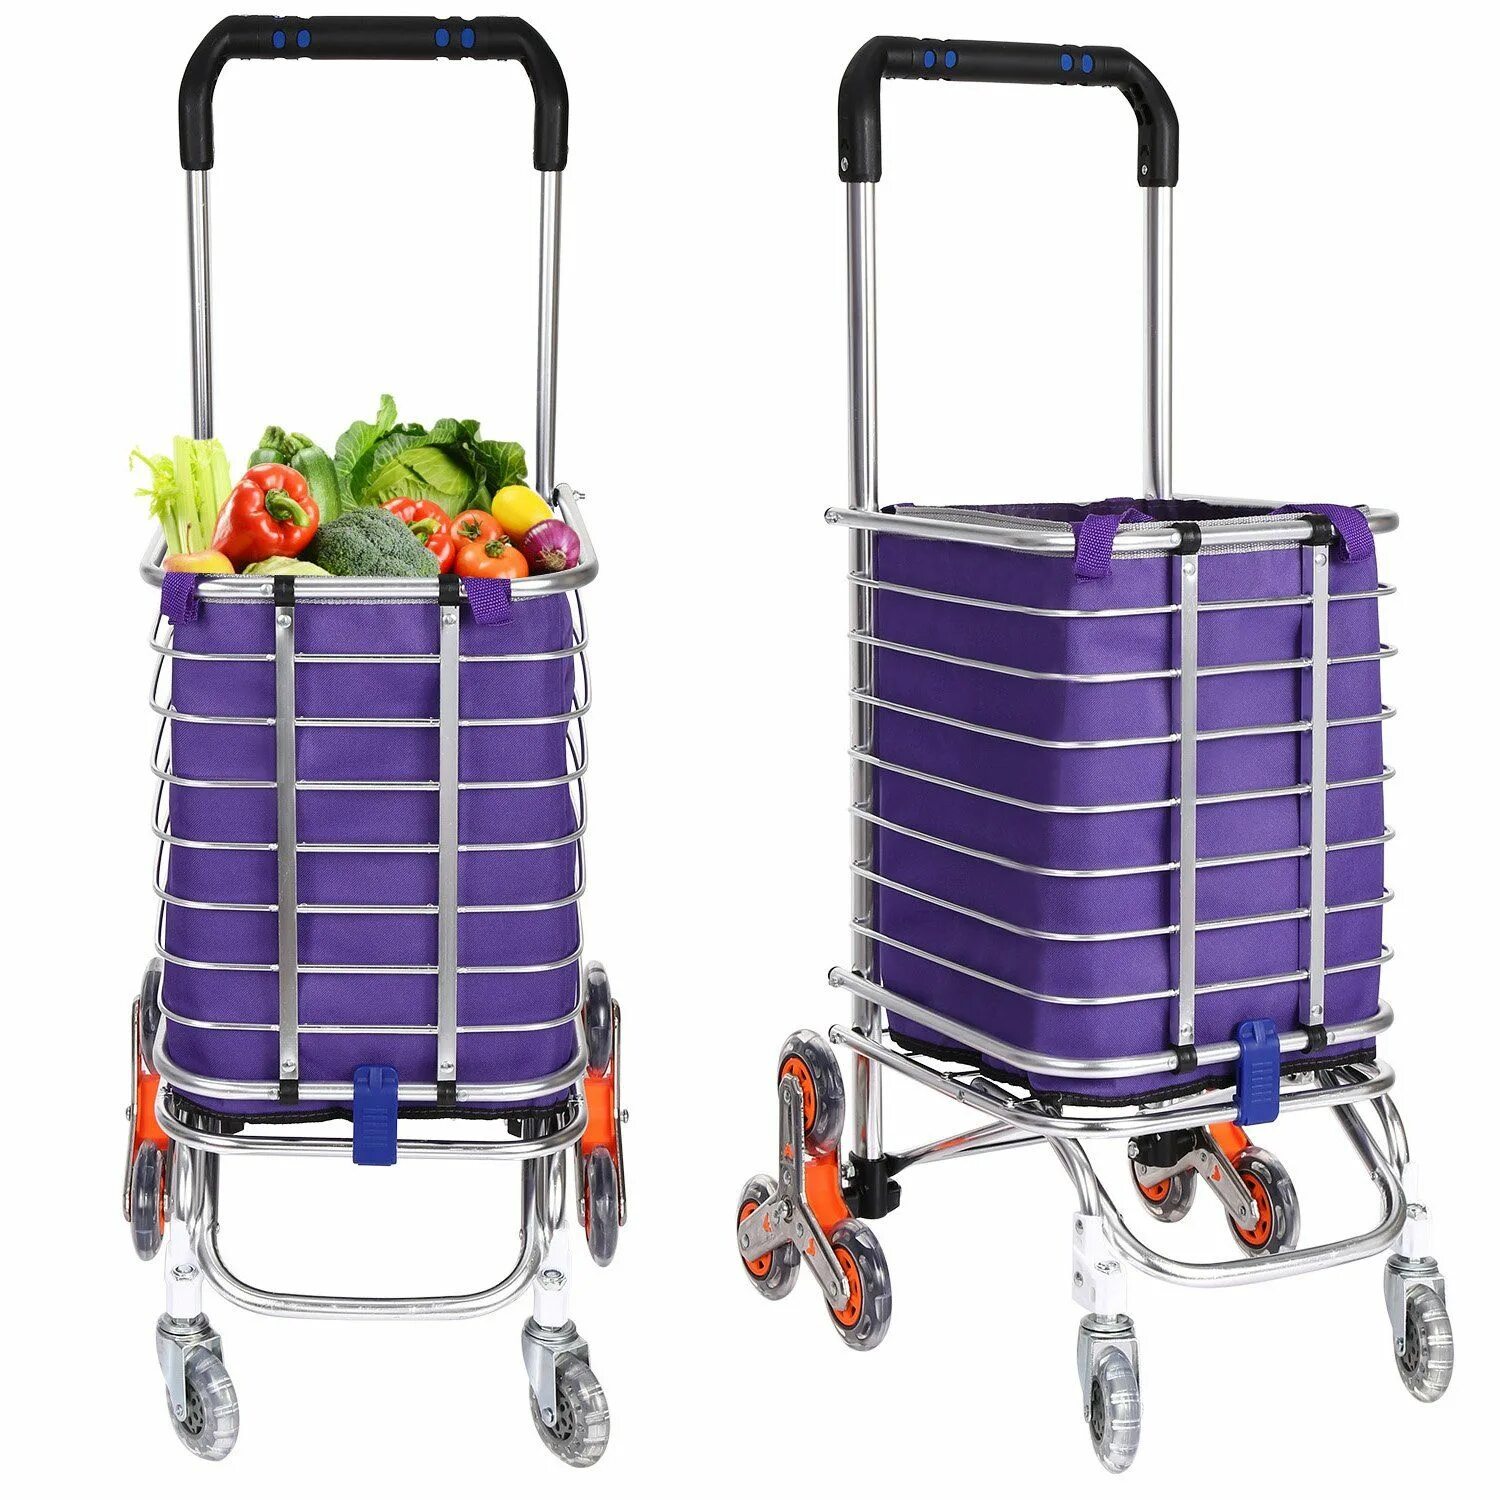 Тележка на колесиках. Тележка connect Trolley Cart. C0197 тележка/ Colour Trolley/styling 2015. Trolley (тележка) WJ(B)-(R)U(A)M(in) -01-10. Shopping Bags & Trolleys shopping Bags & Trolleys.